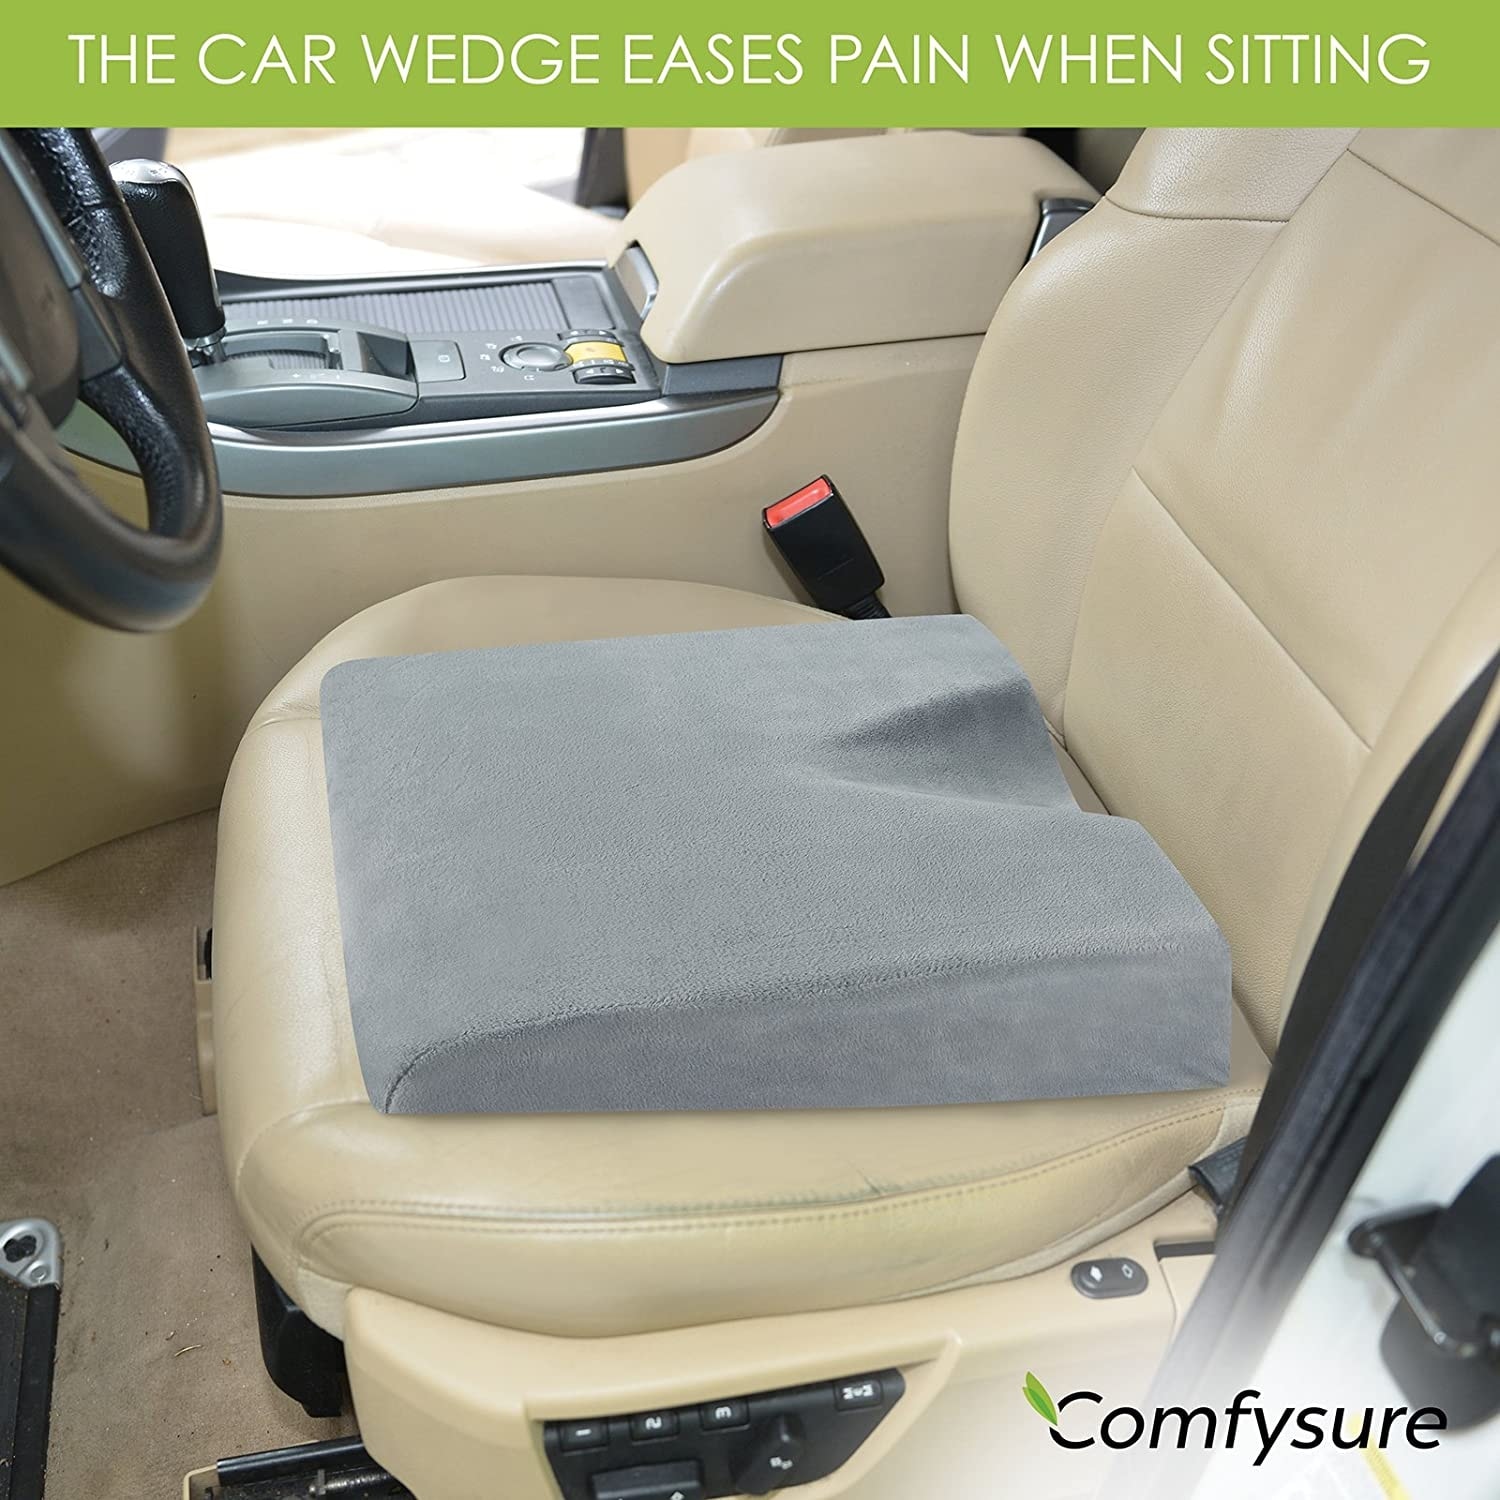 ComfySure Car Seat Wedge Pillow - Memory Foam Firm Cushion-Pain Relief